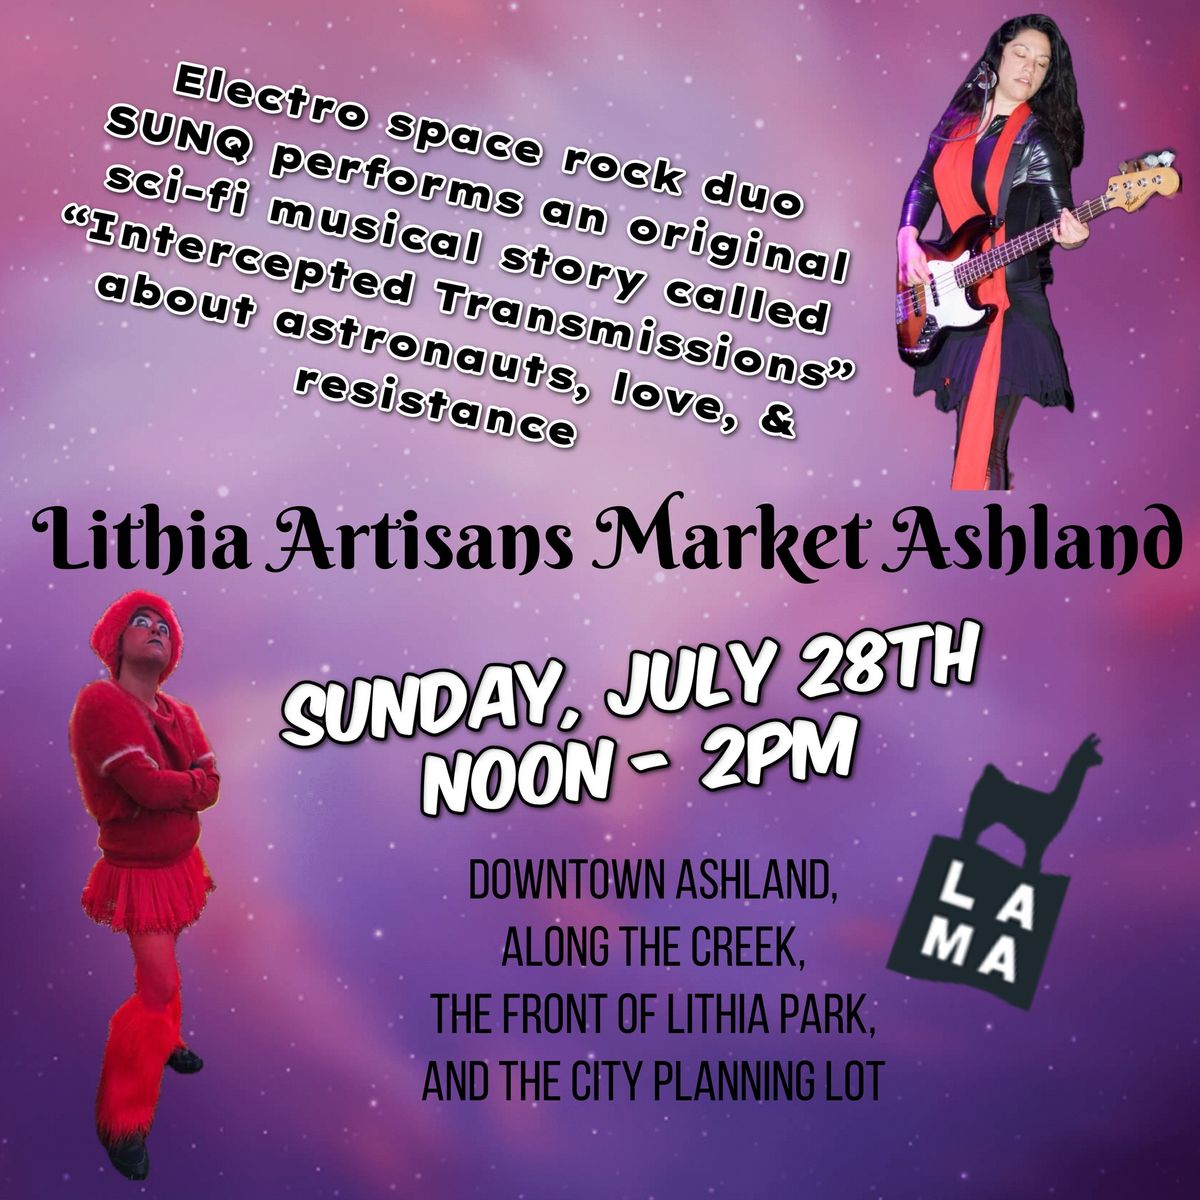 Live at Lithia Artisans Market Ashland!